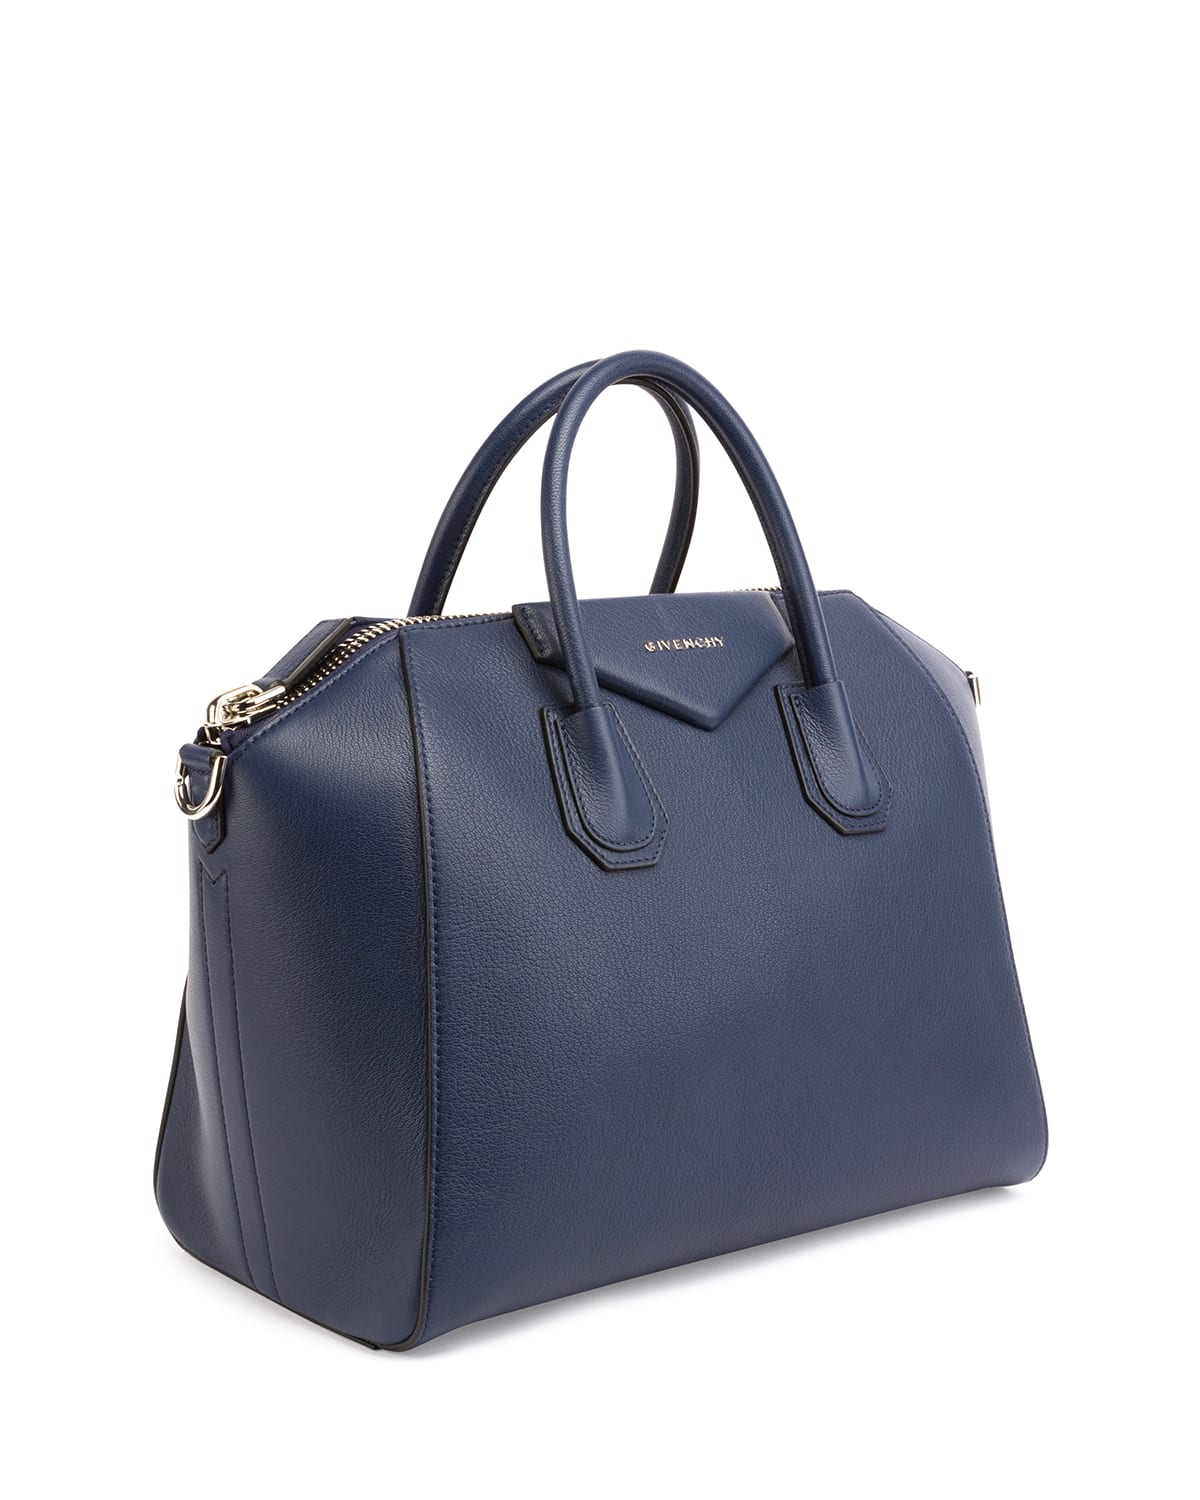 Givenchy Navy Blue Grained Leather Medium Antigona Bag